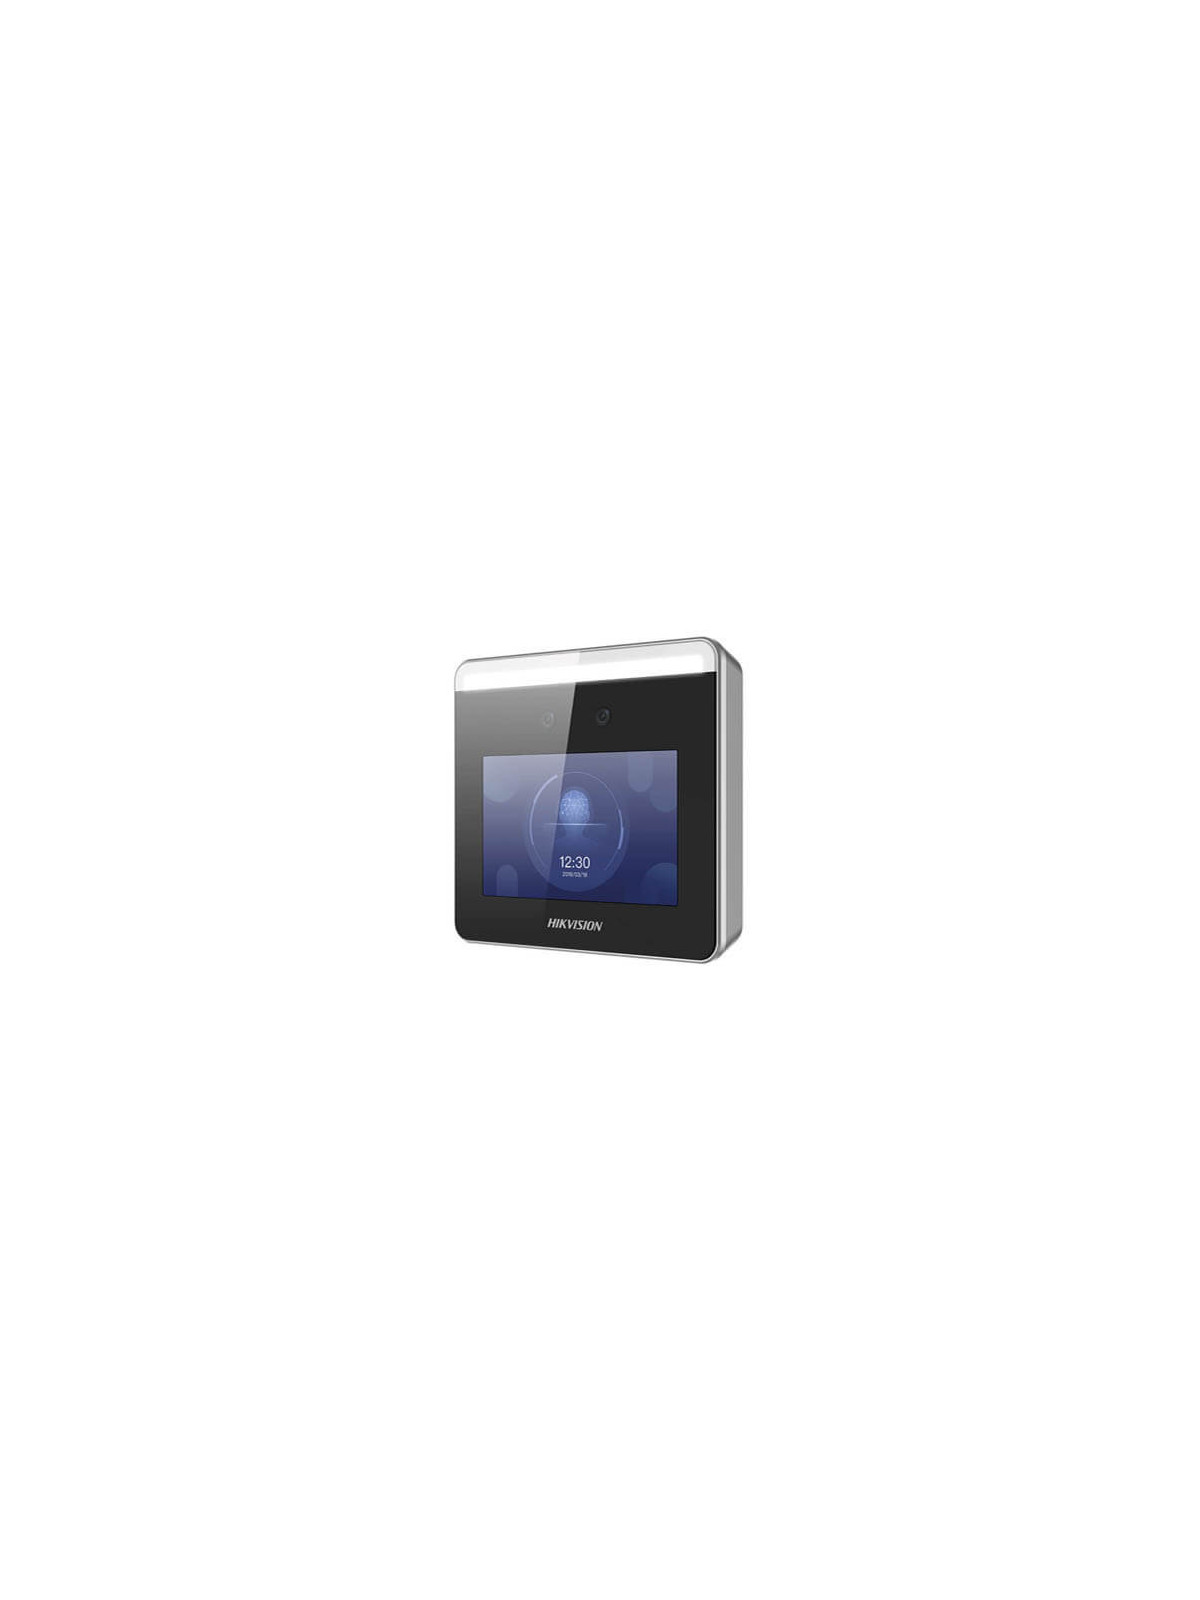 Terminal autónomo reconocimiento facial Hikvision DS-K1T331W Wifi LCD 4"